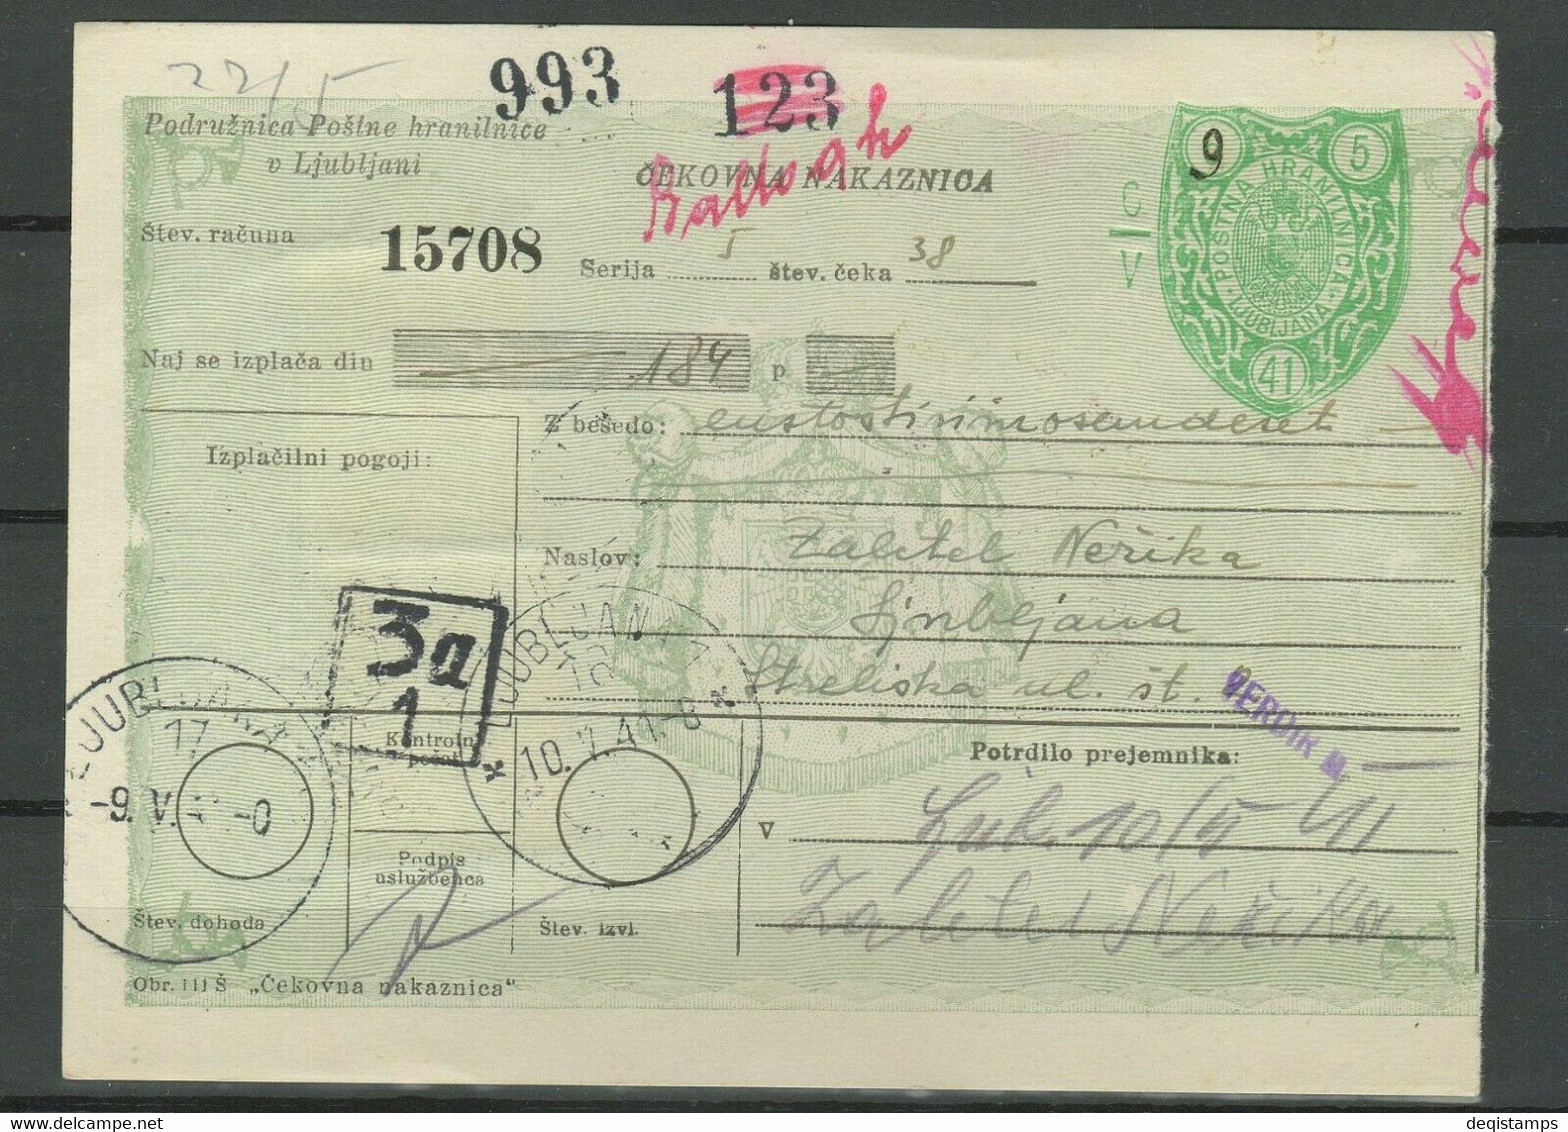 Italy Occupation Of Slovenia - Ljubljana 12.05.1941 ☀ Post Office Check/deposit Slip - Lubiana